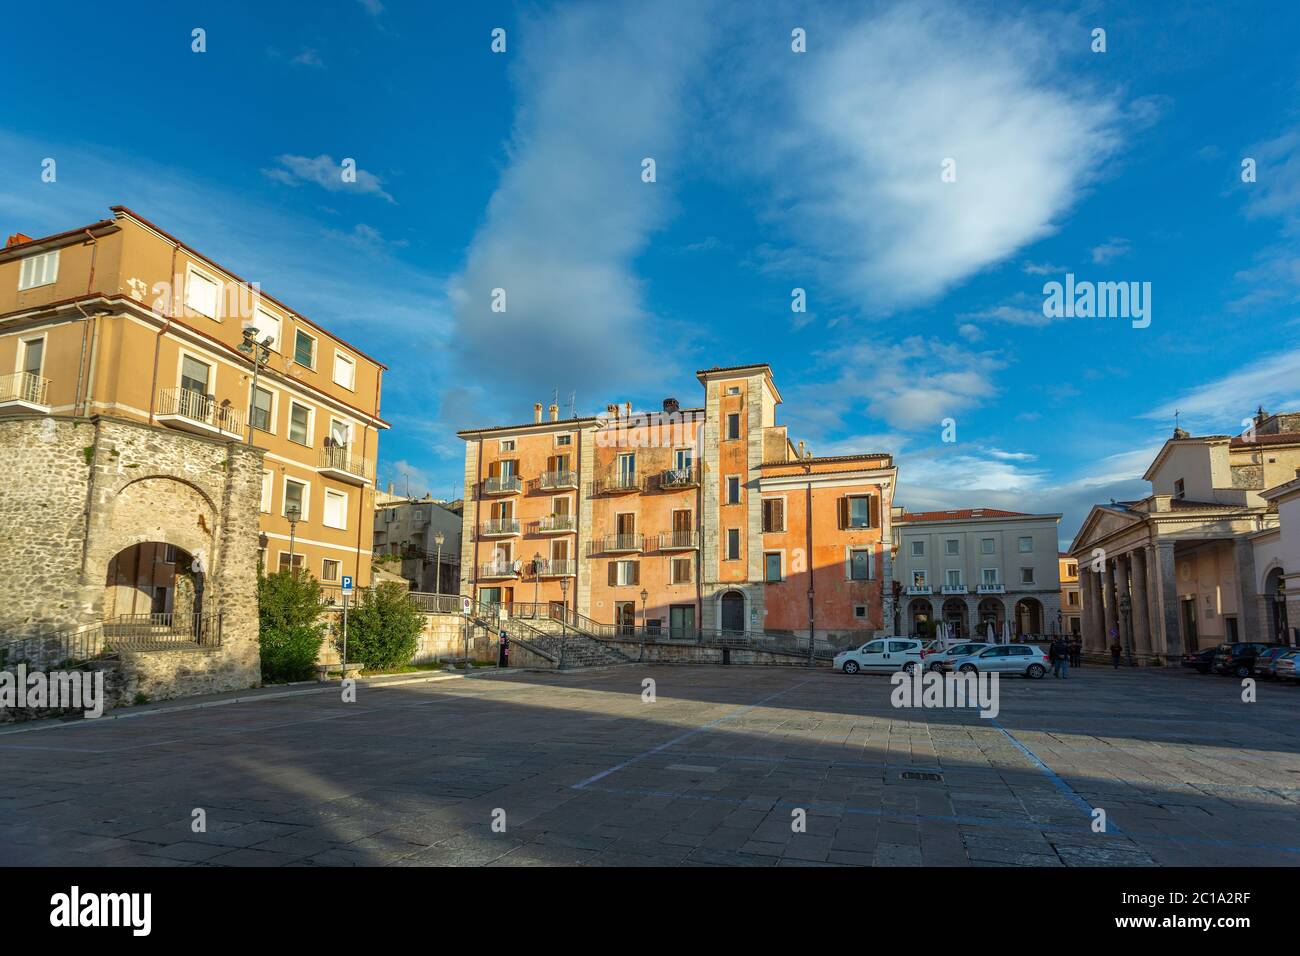 Andrea d'Isernia square. Isernia, Molise region, Italy, Europe Stock Photo